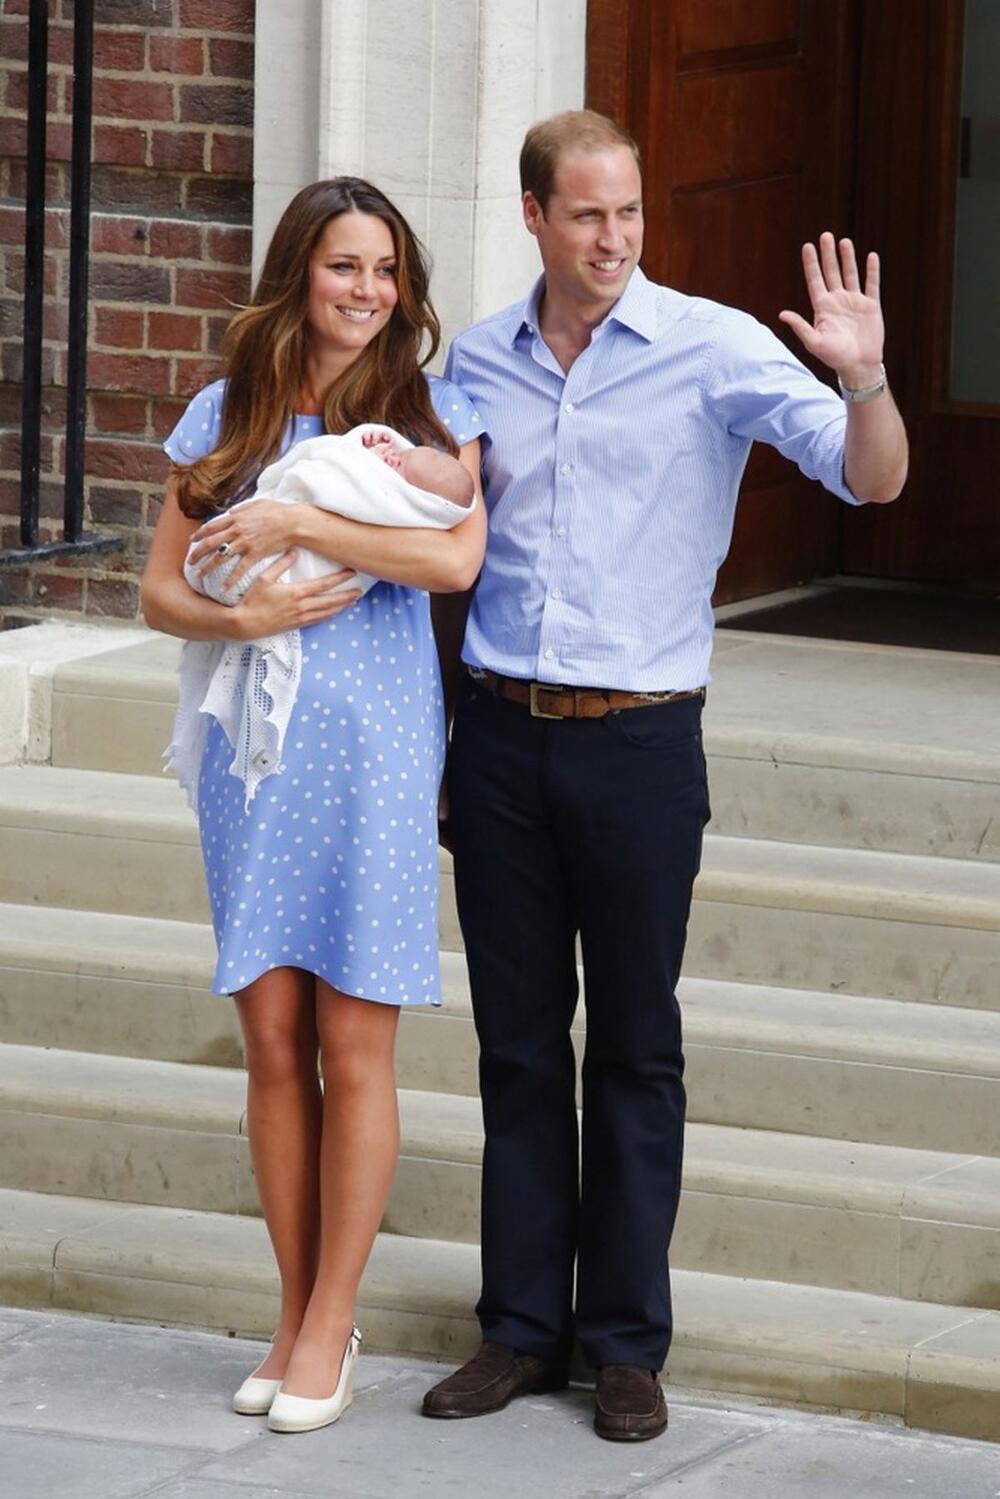 Kejt Midlton ispred bolnice nekoliko sati posle rođenja princa Džordža